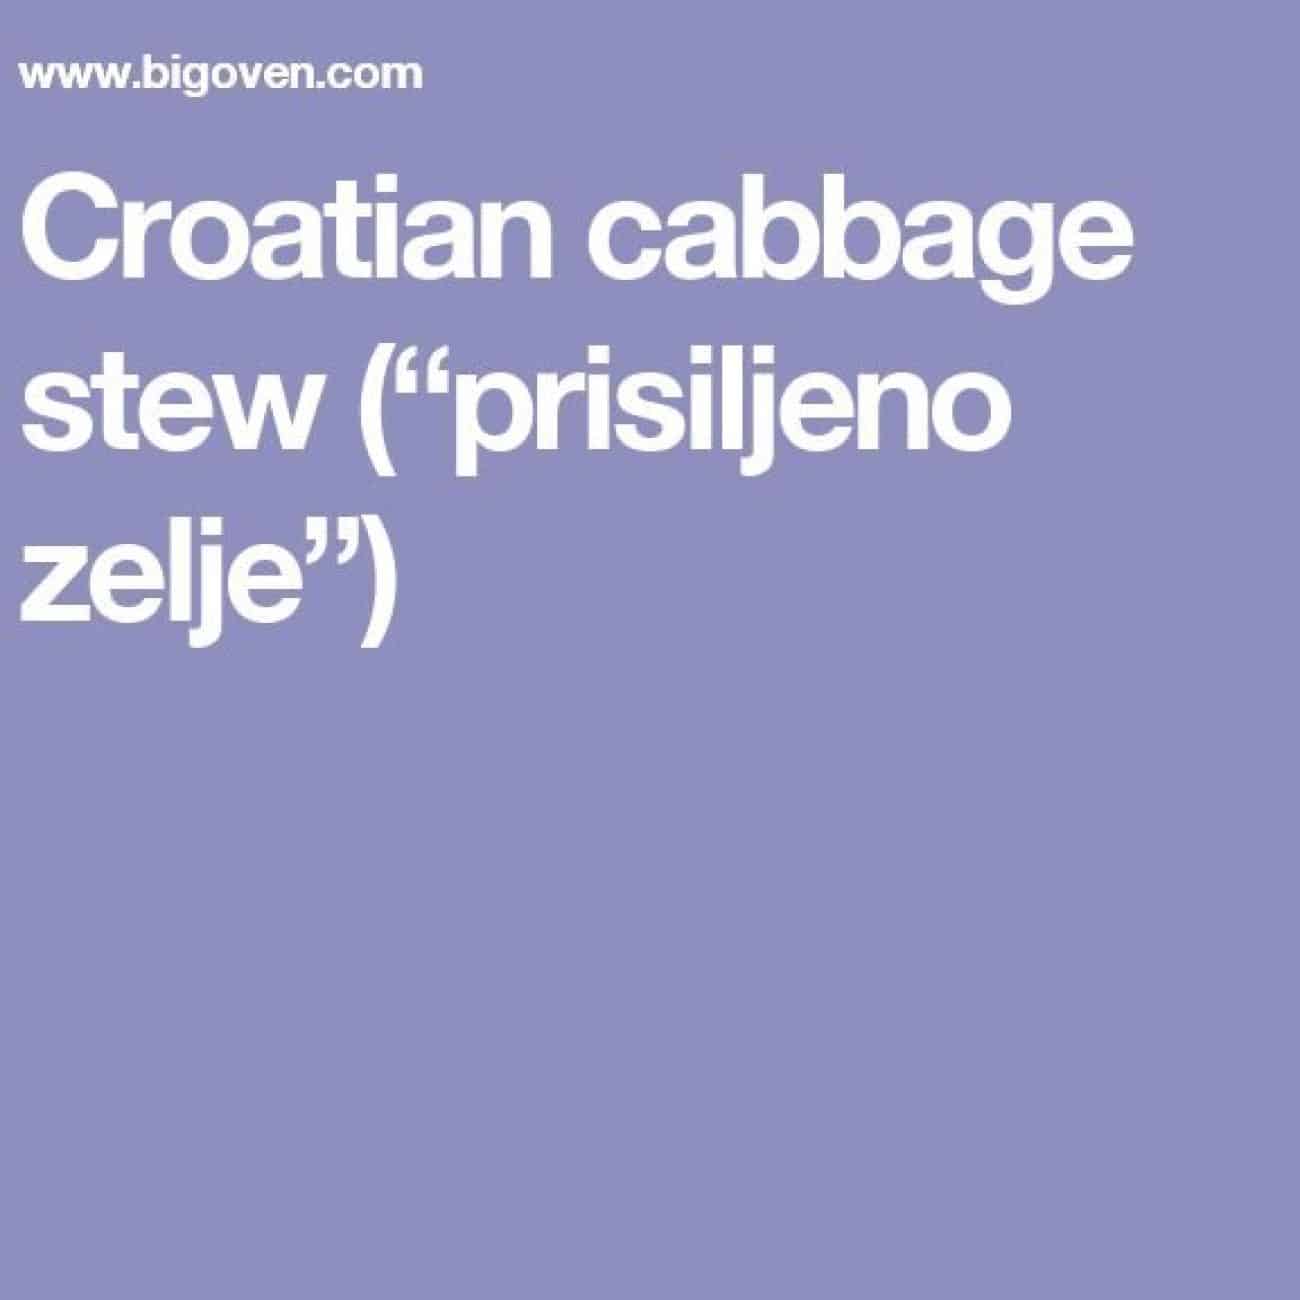 Croatian Cabbage Stew Prisiljeno